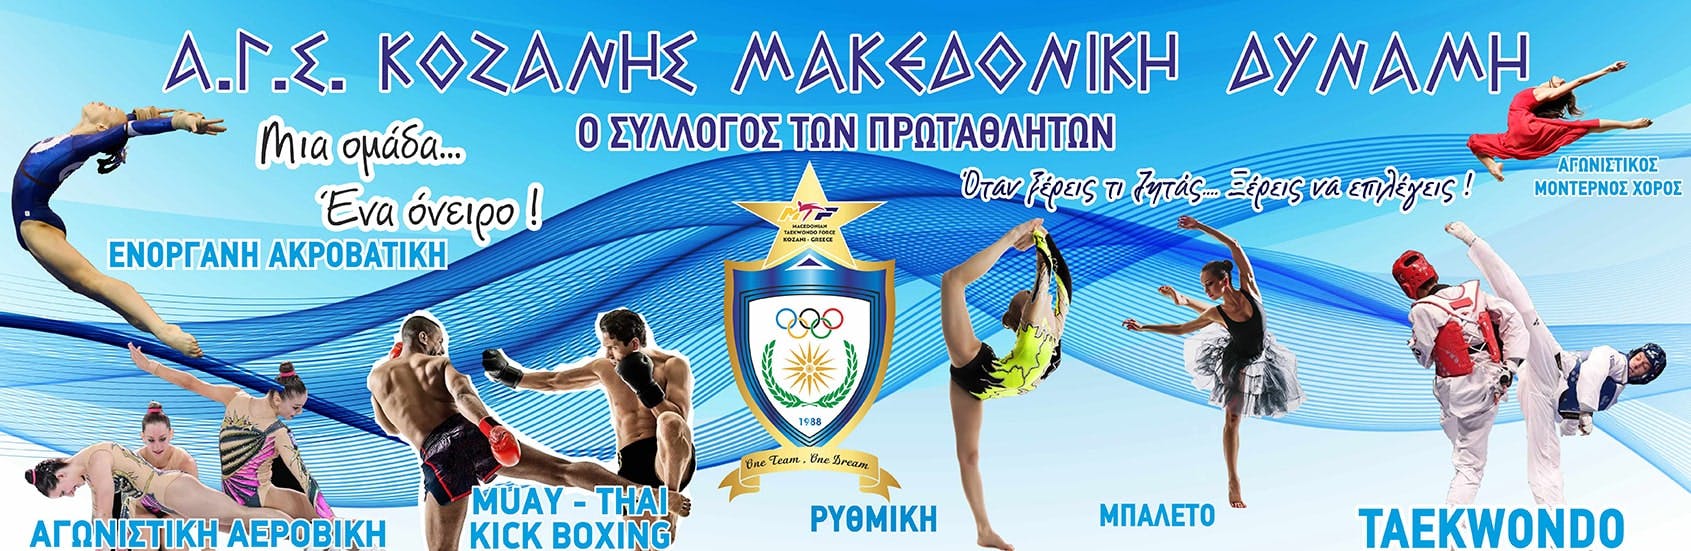 makedonikidinami-logo